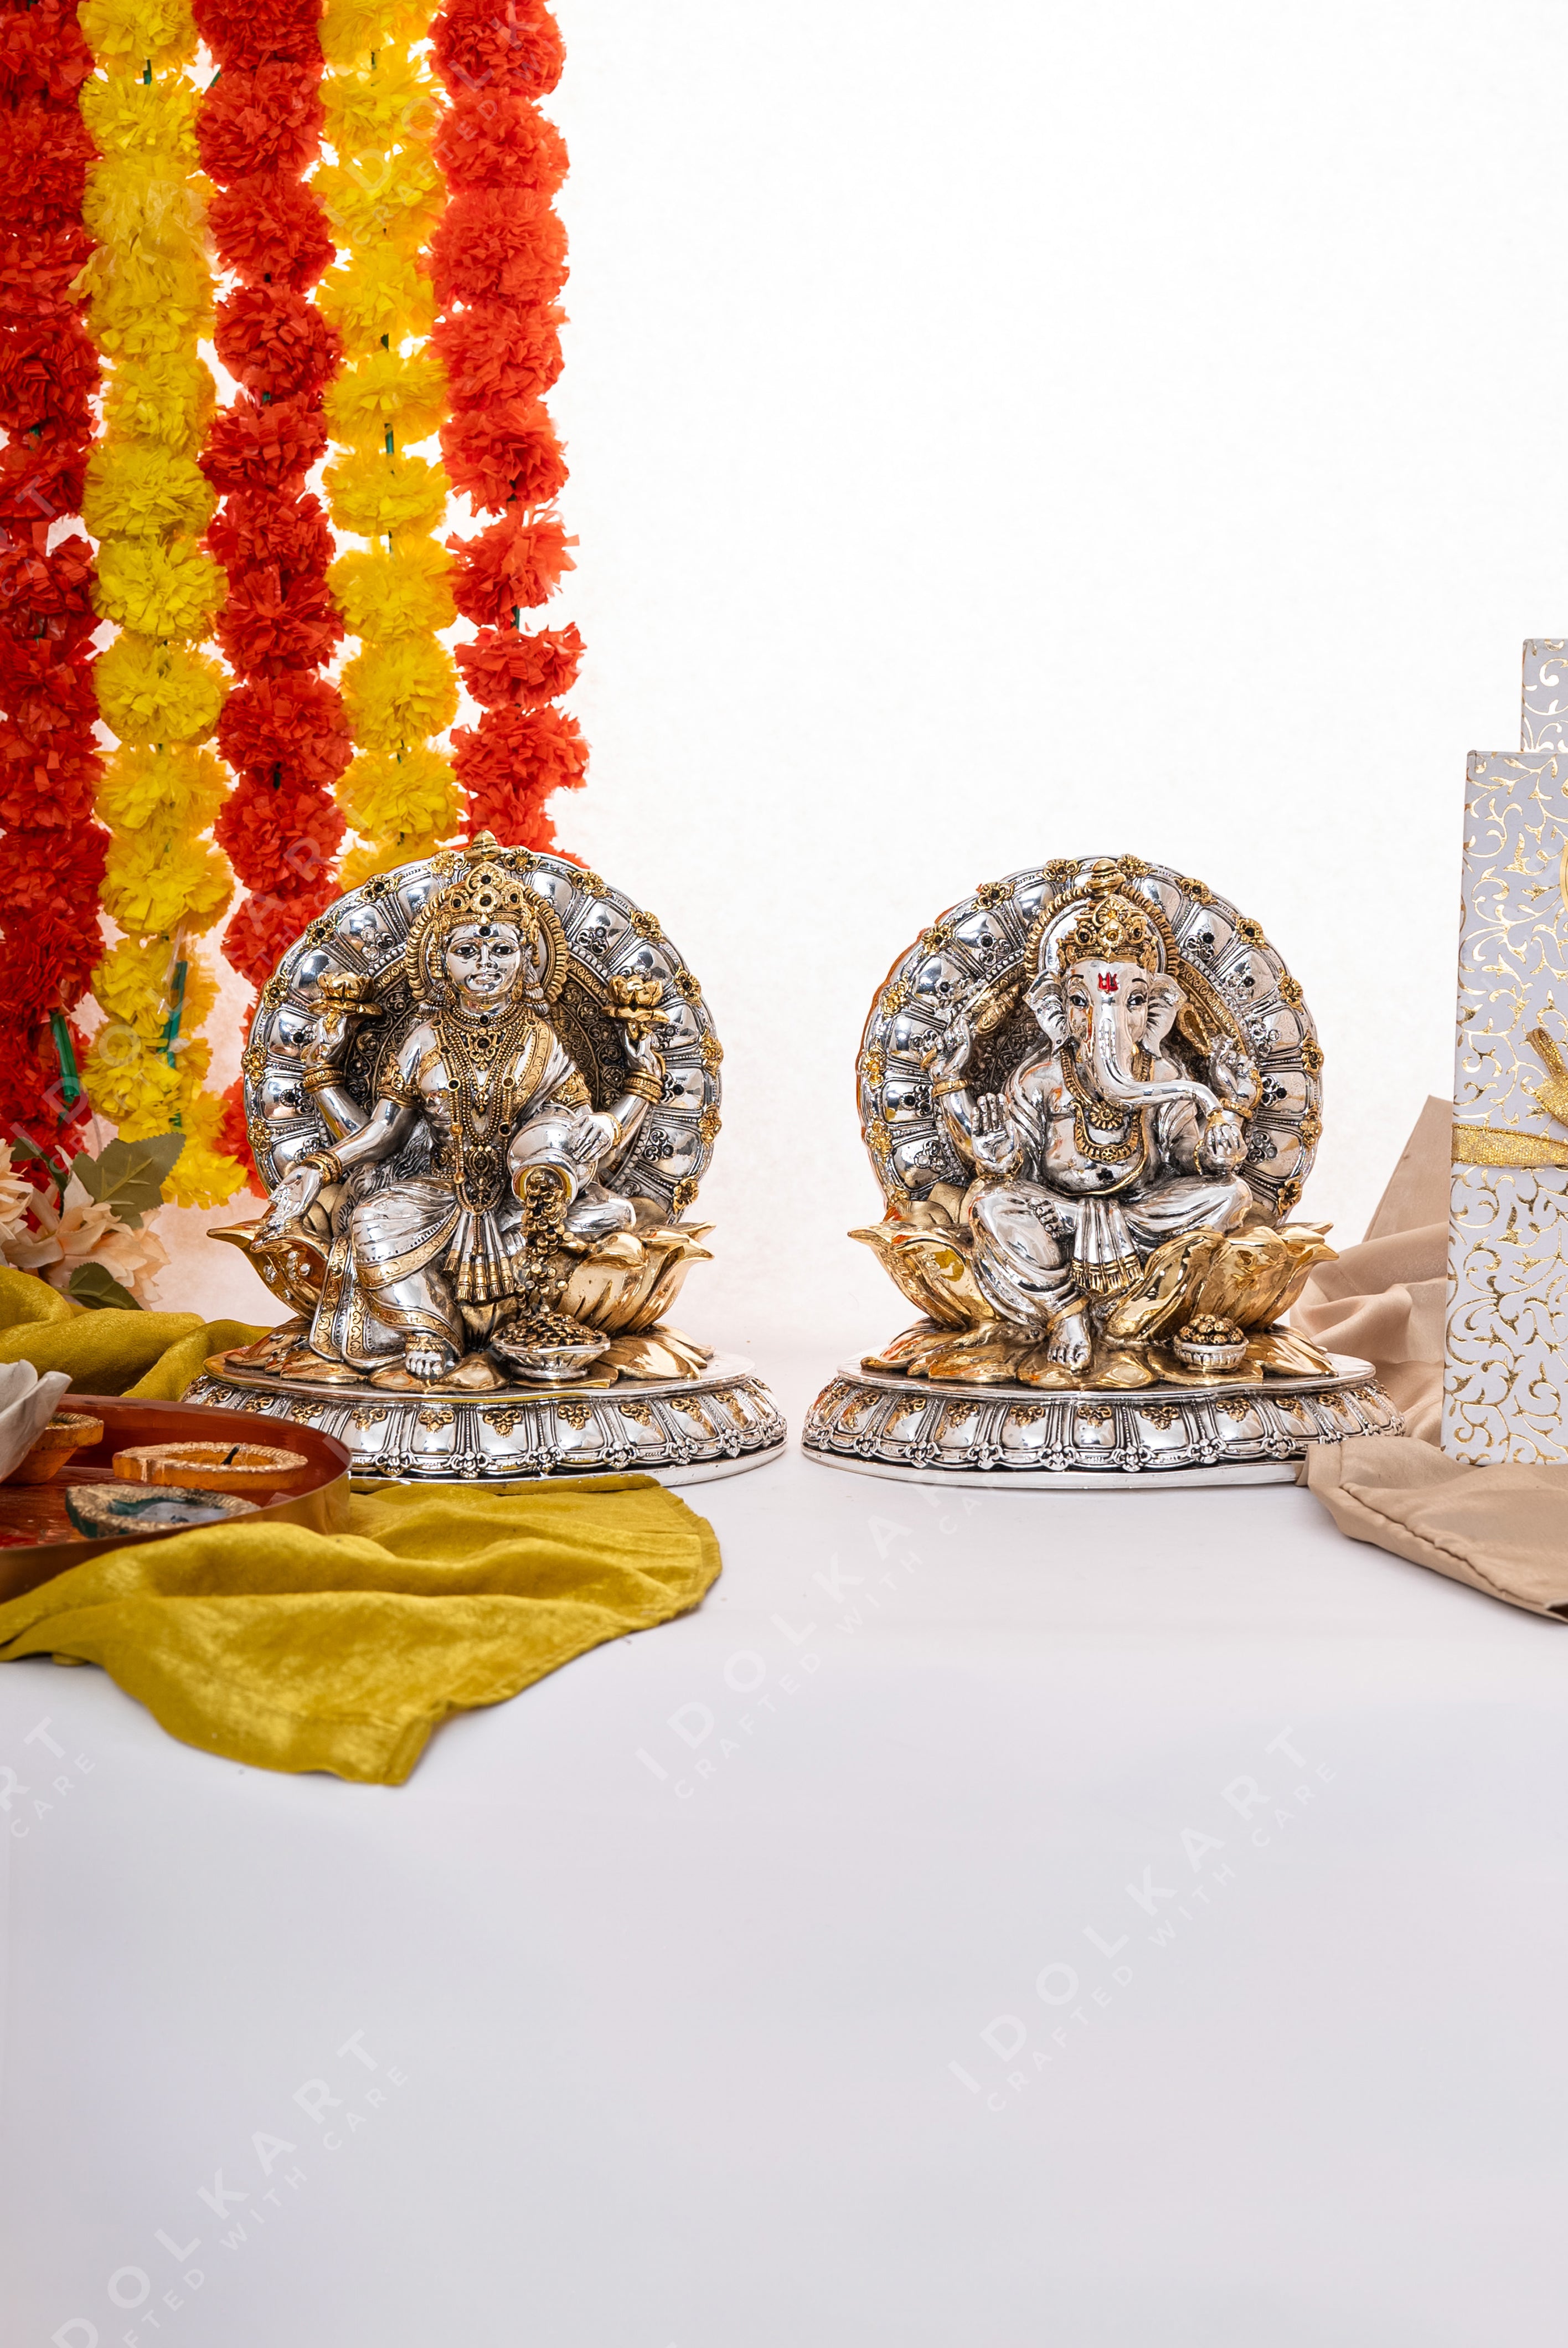 Gold & Silver Ganesha Lakshmi Pair Idol